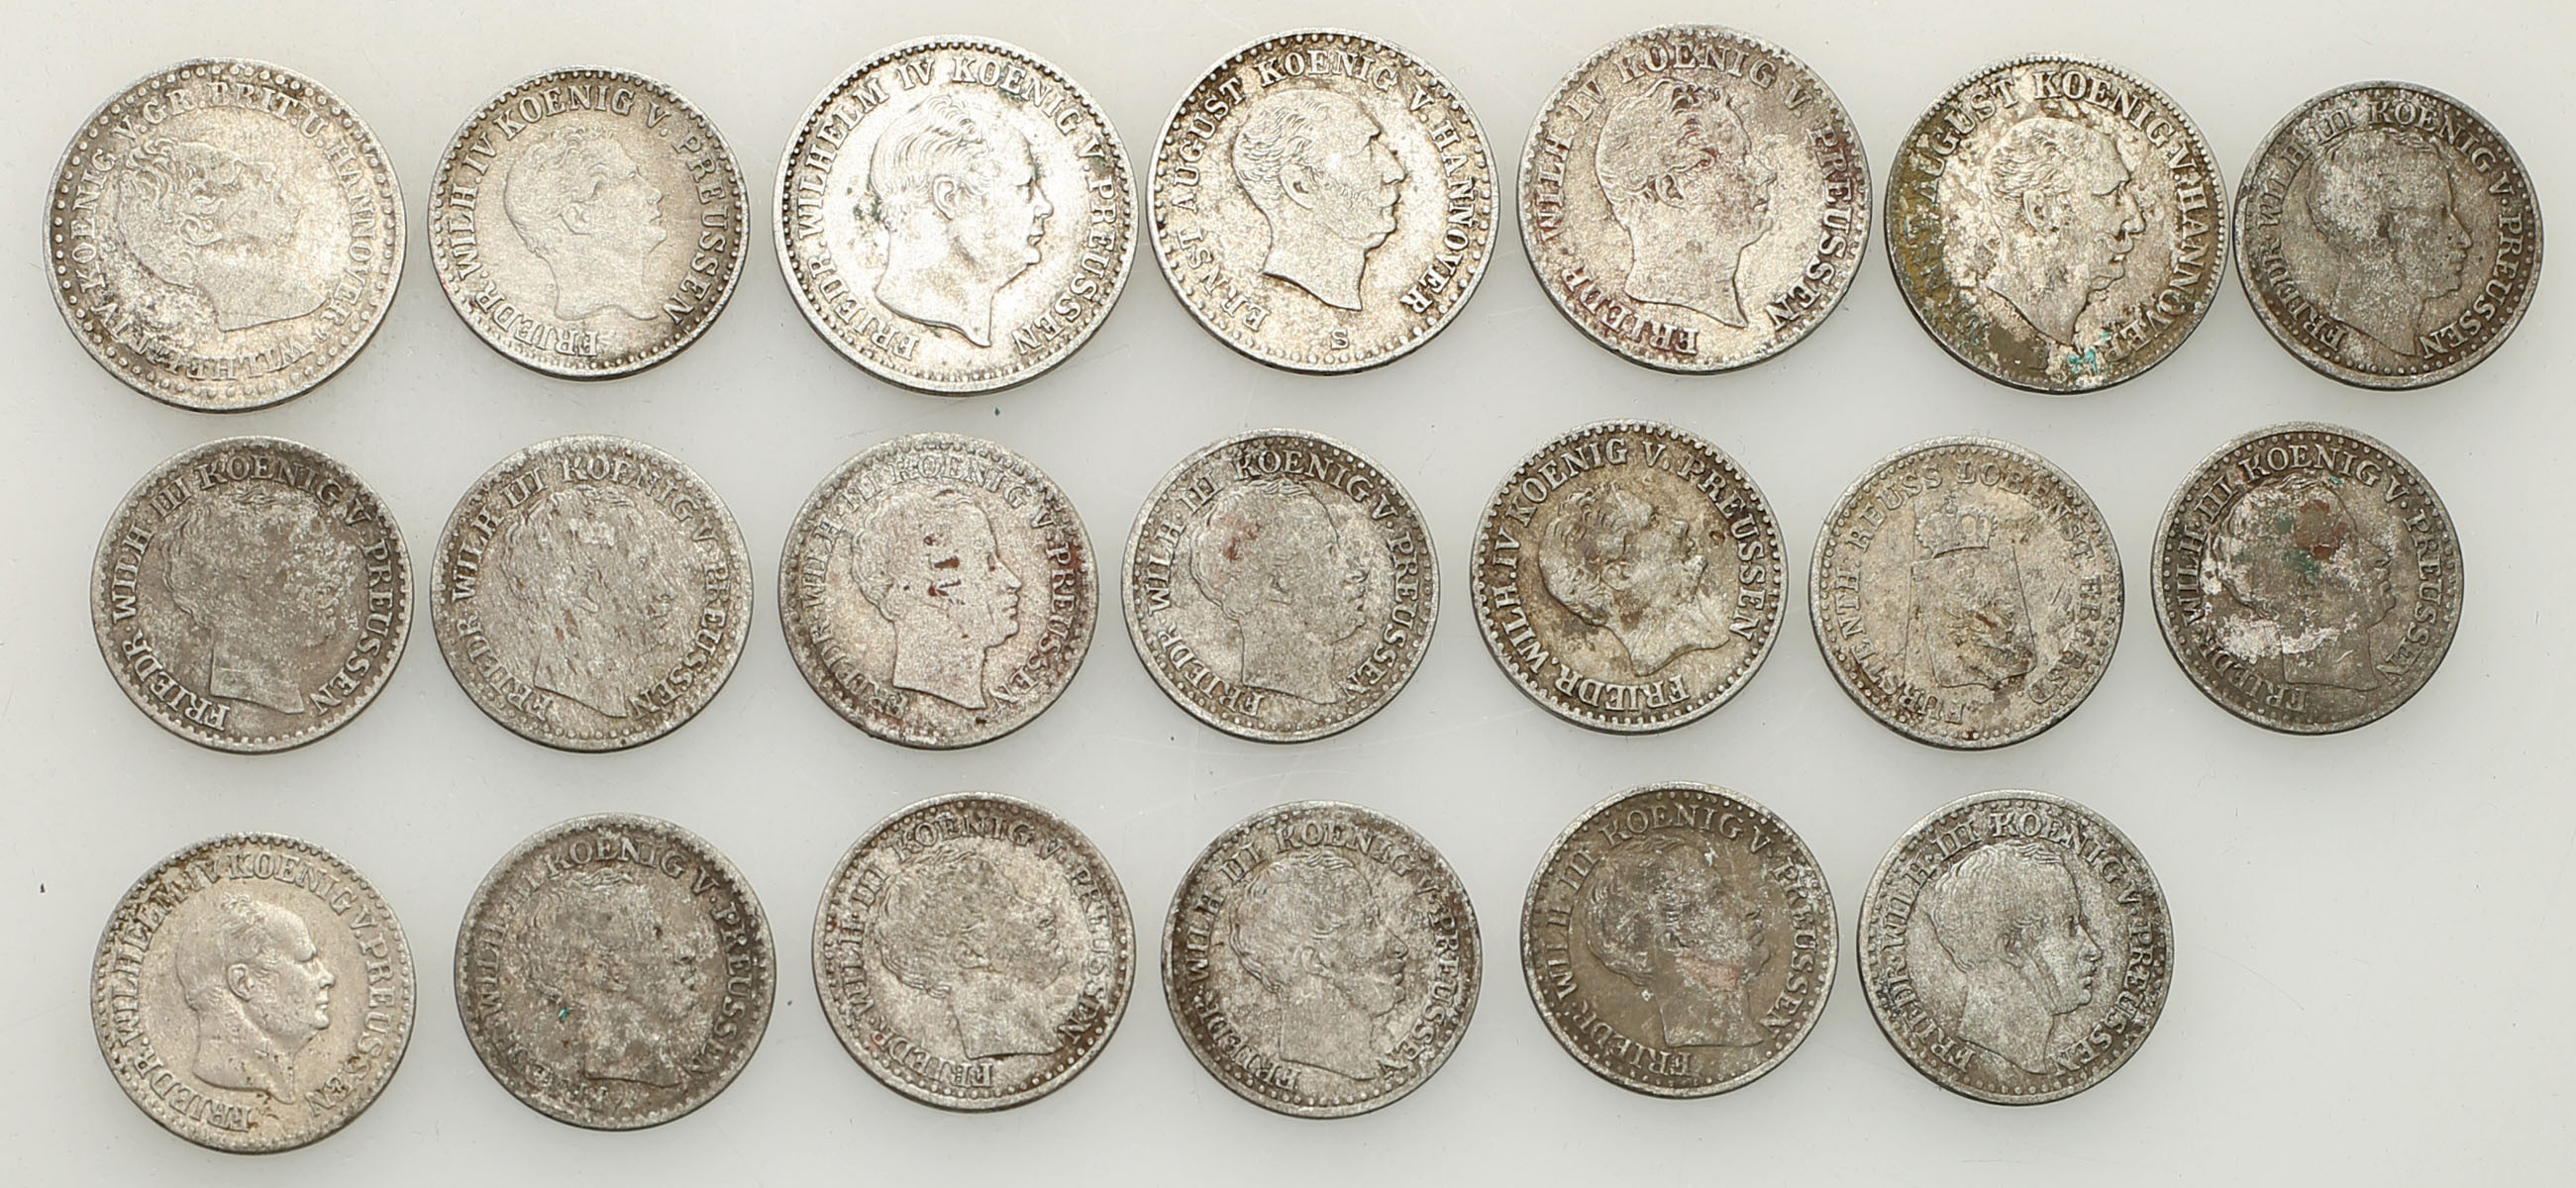 Niemcy, Prusy. 1 do 2 1/2 silbergroschen, 1/12 talara 1821-1858, zestaw 20 monet